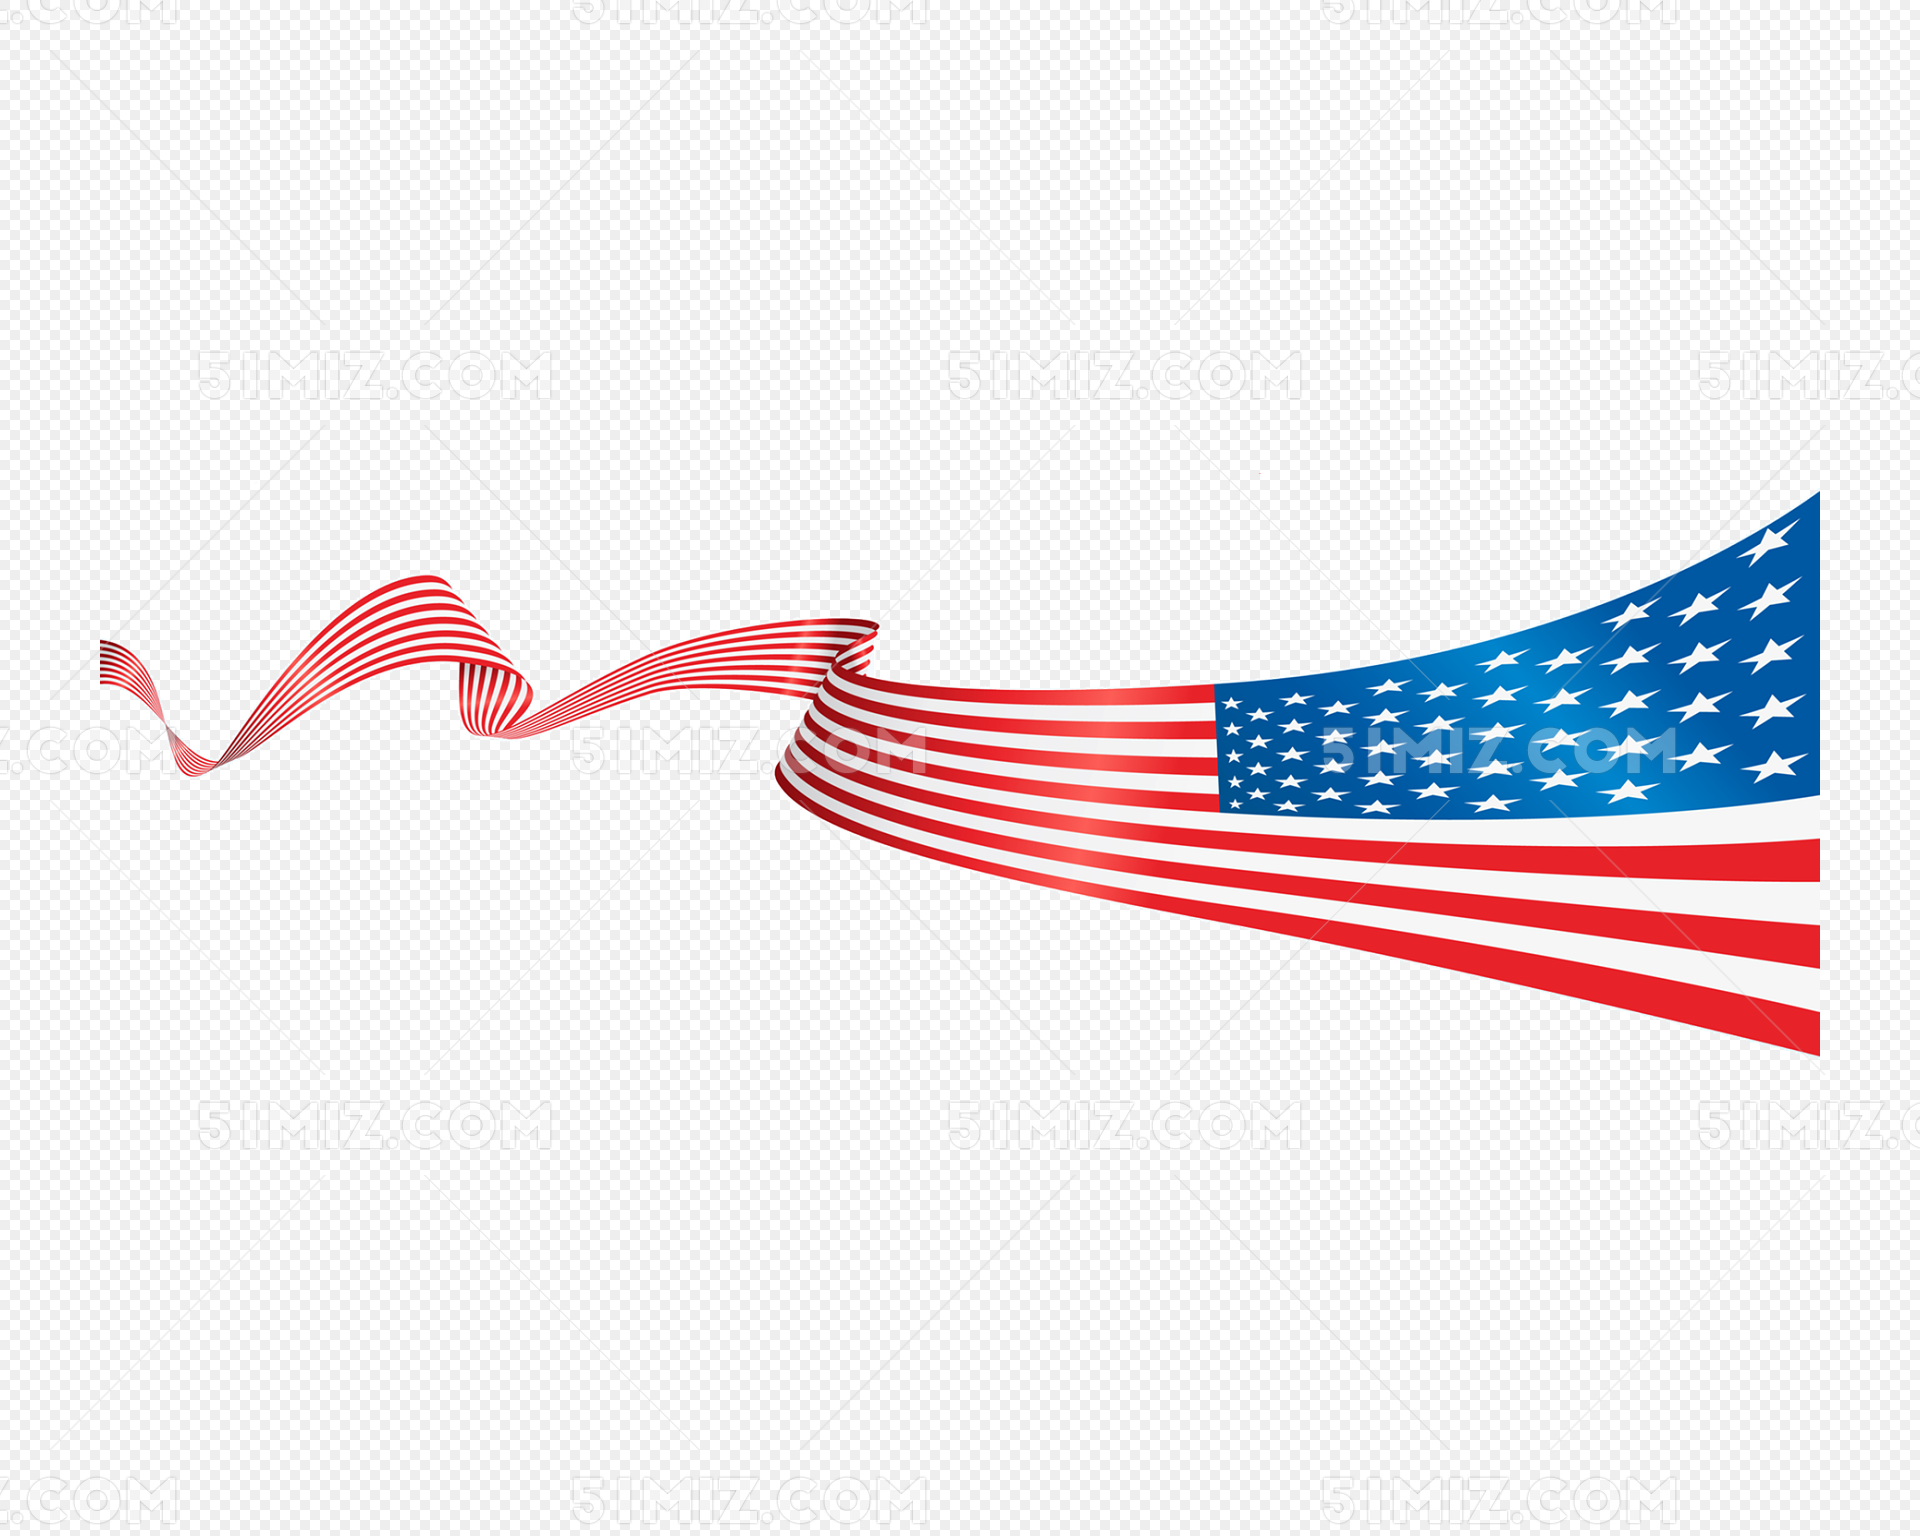 美国国旗 免费图片 - Public Domain Pictures